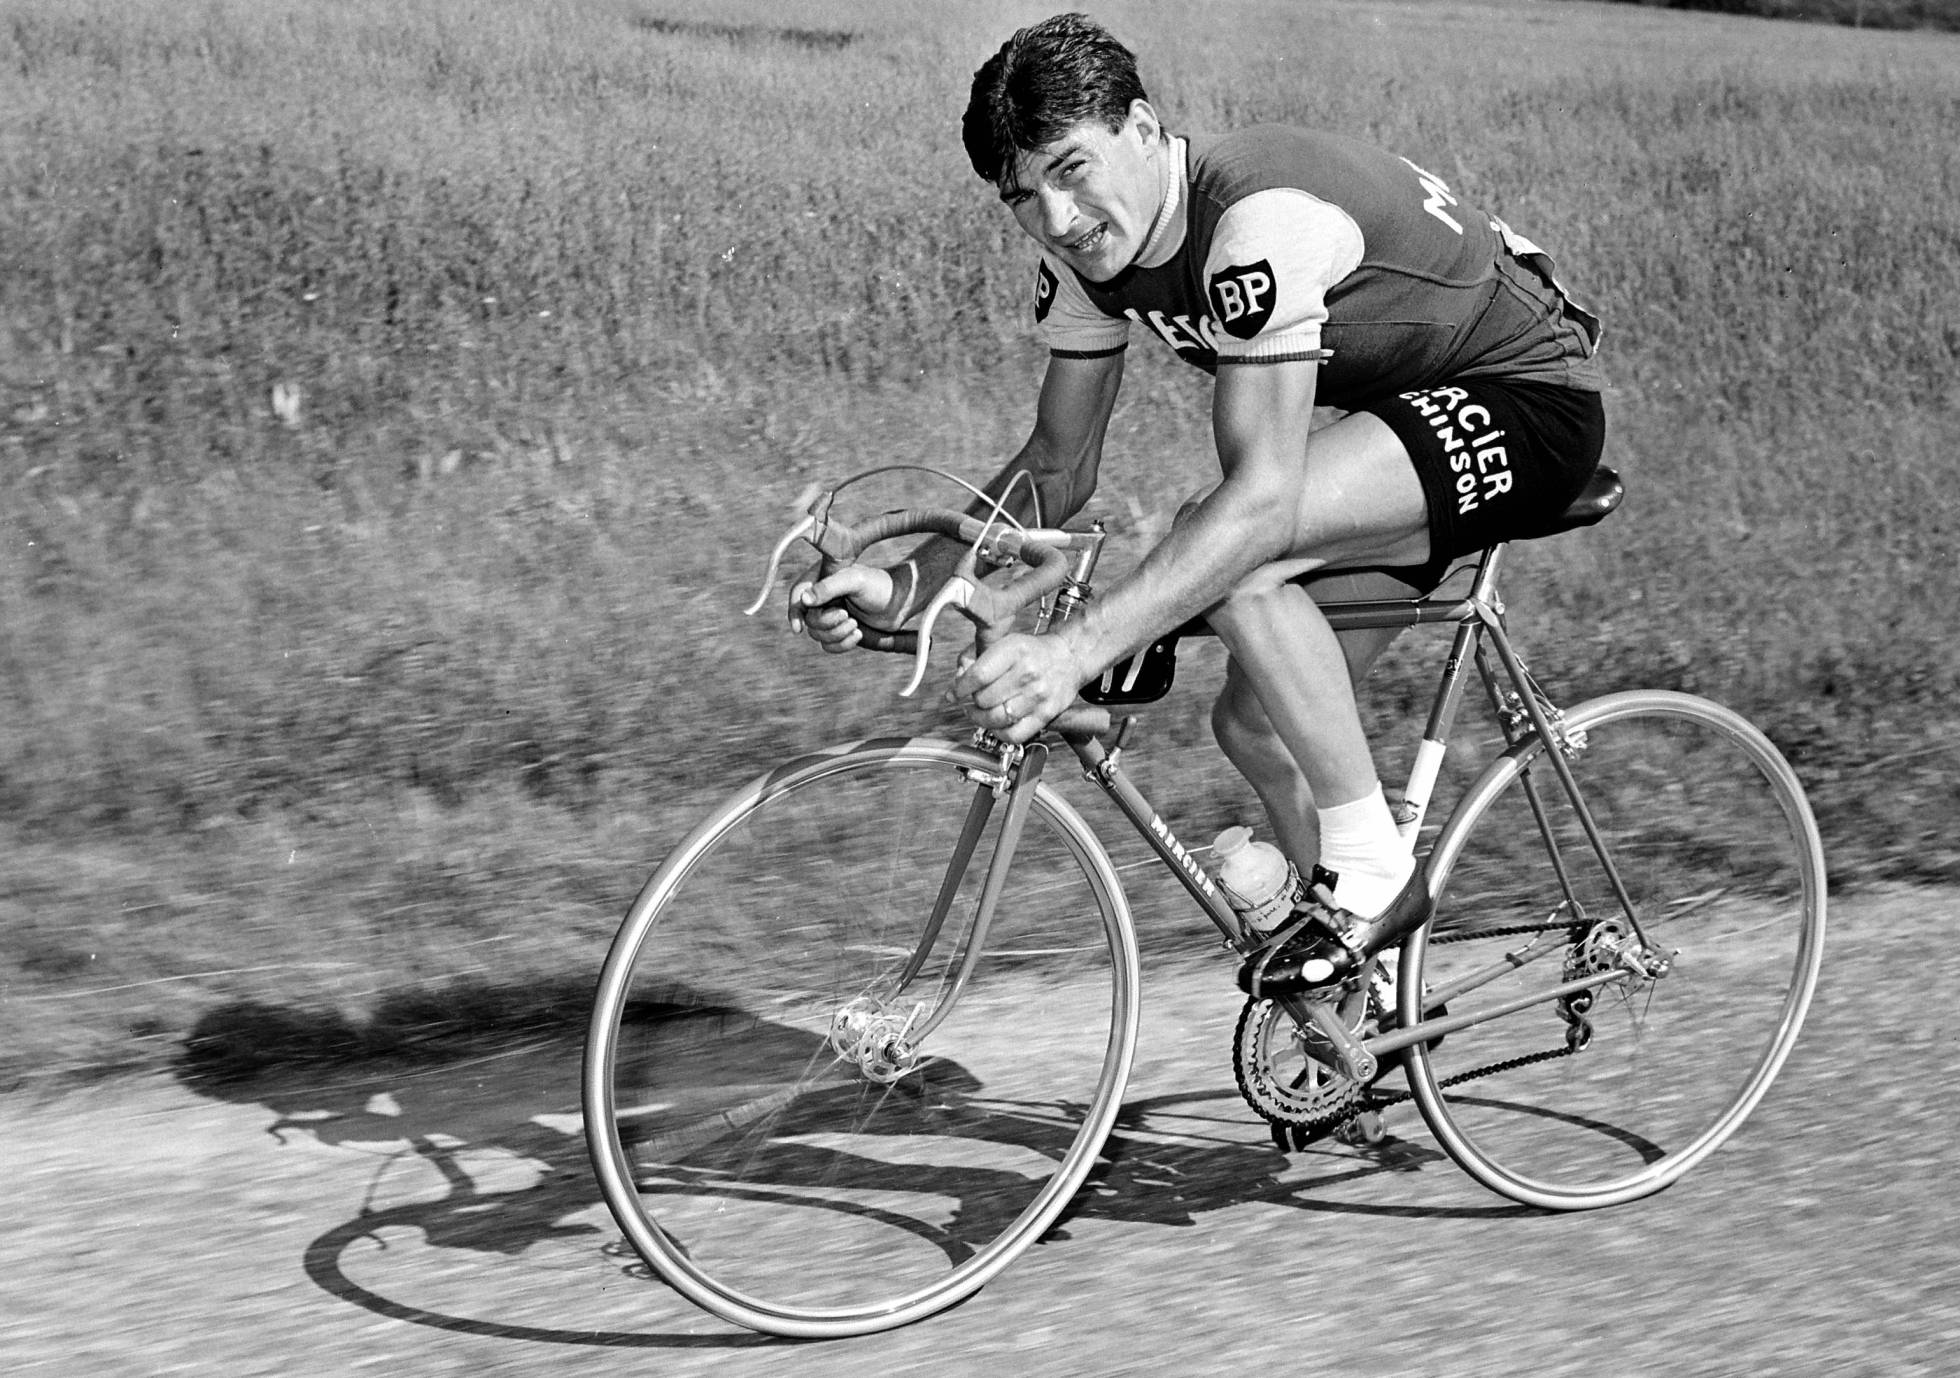 Ciclismo épico, legendario: Bartali, Coppi, Anquetil, Bahamontes, Gaul, Gimondi, Merckx... - Página 2 1570694132_685186_1570695333_noticia_normal_recorte1